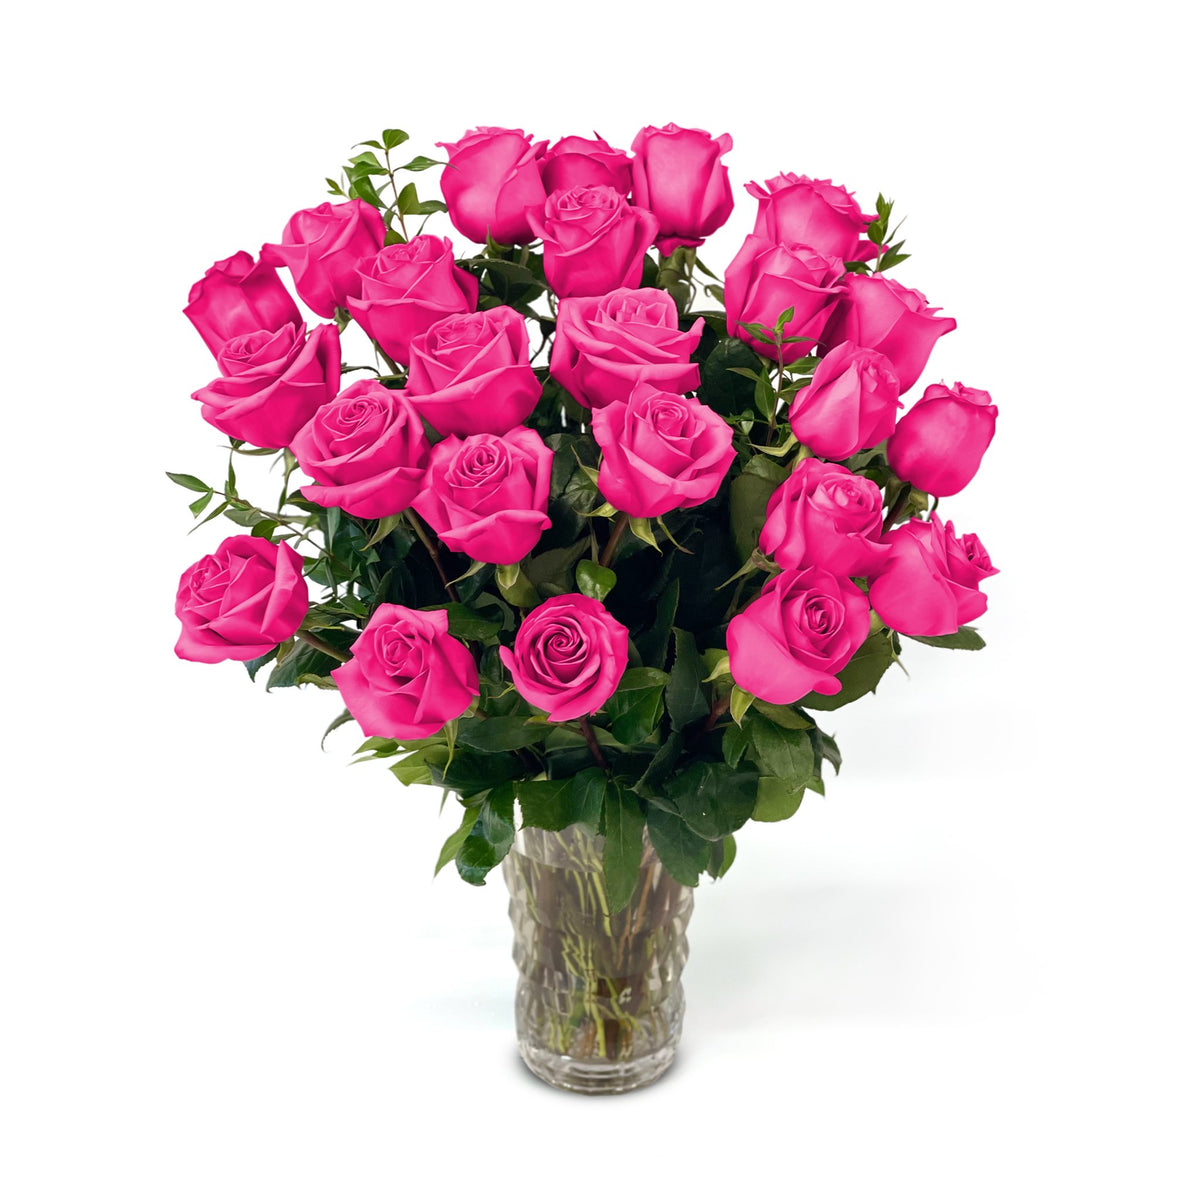 Queens Flower Delivery - Fresh Roses in a Crystal Vase | Hot Pink - 2 Dozen